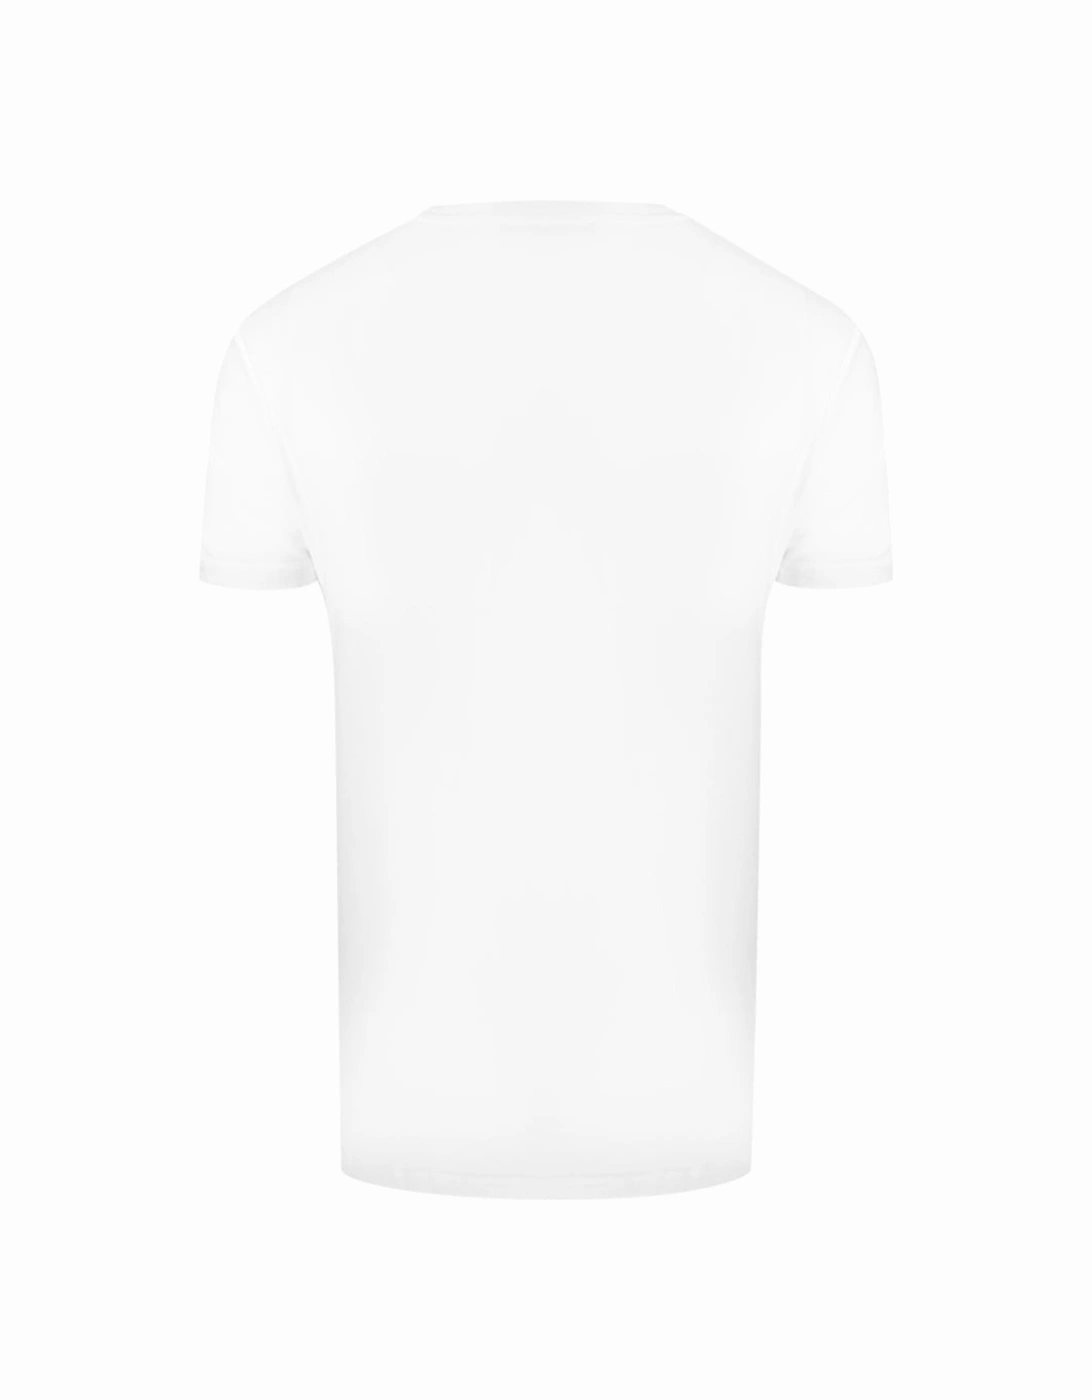 Skull And Crossbones Chest Logo White Underwear T-Shirt